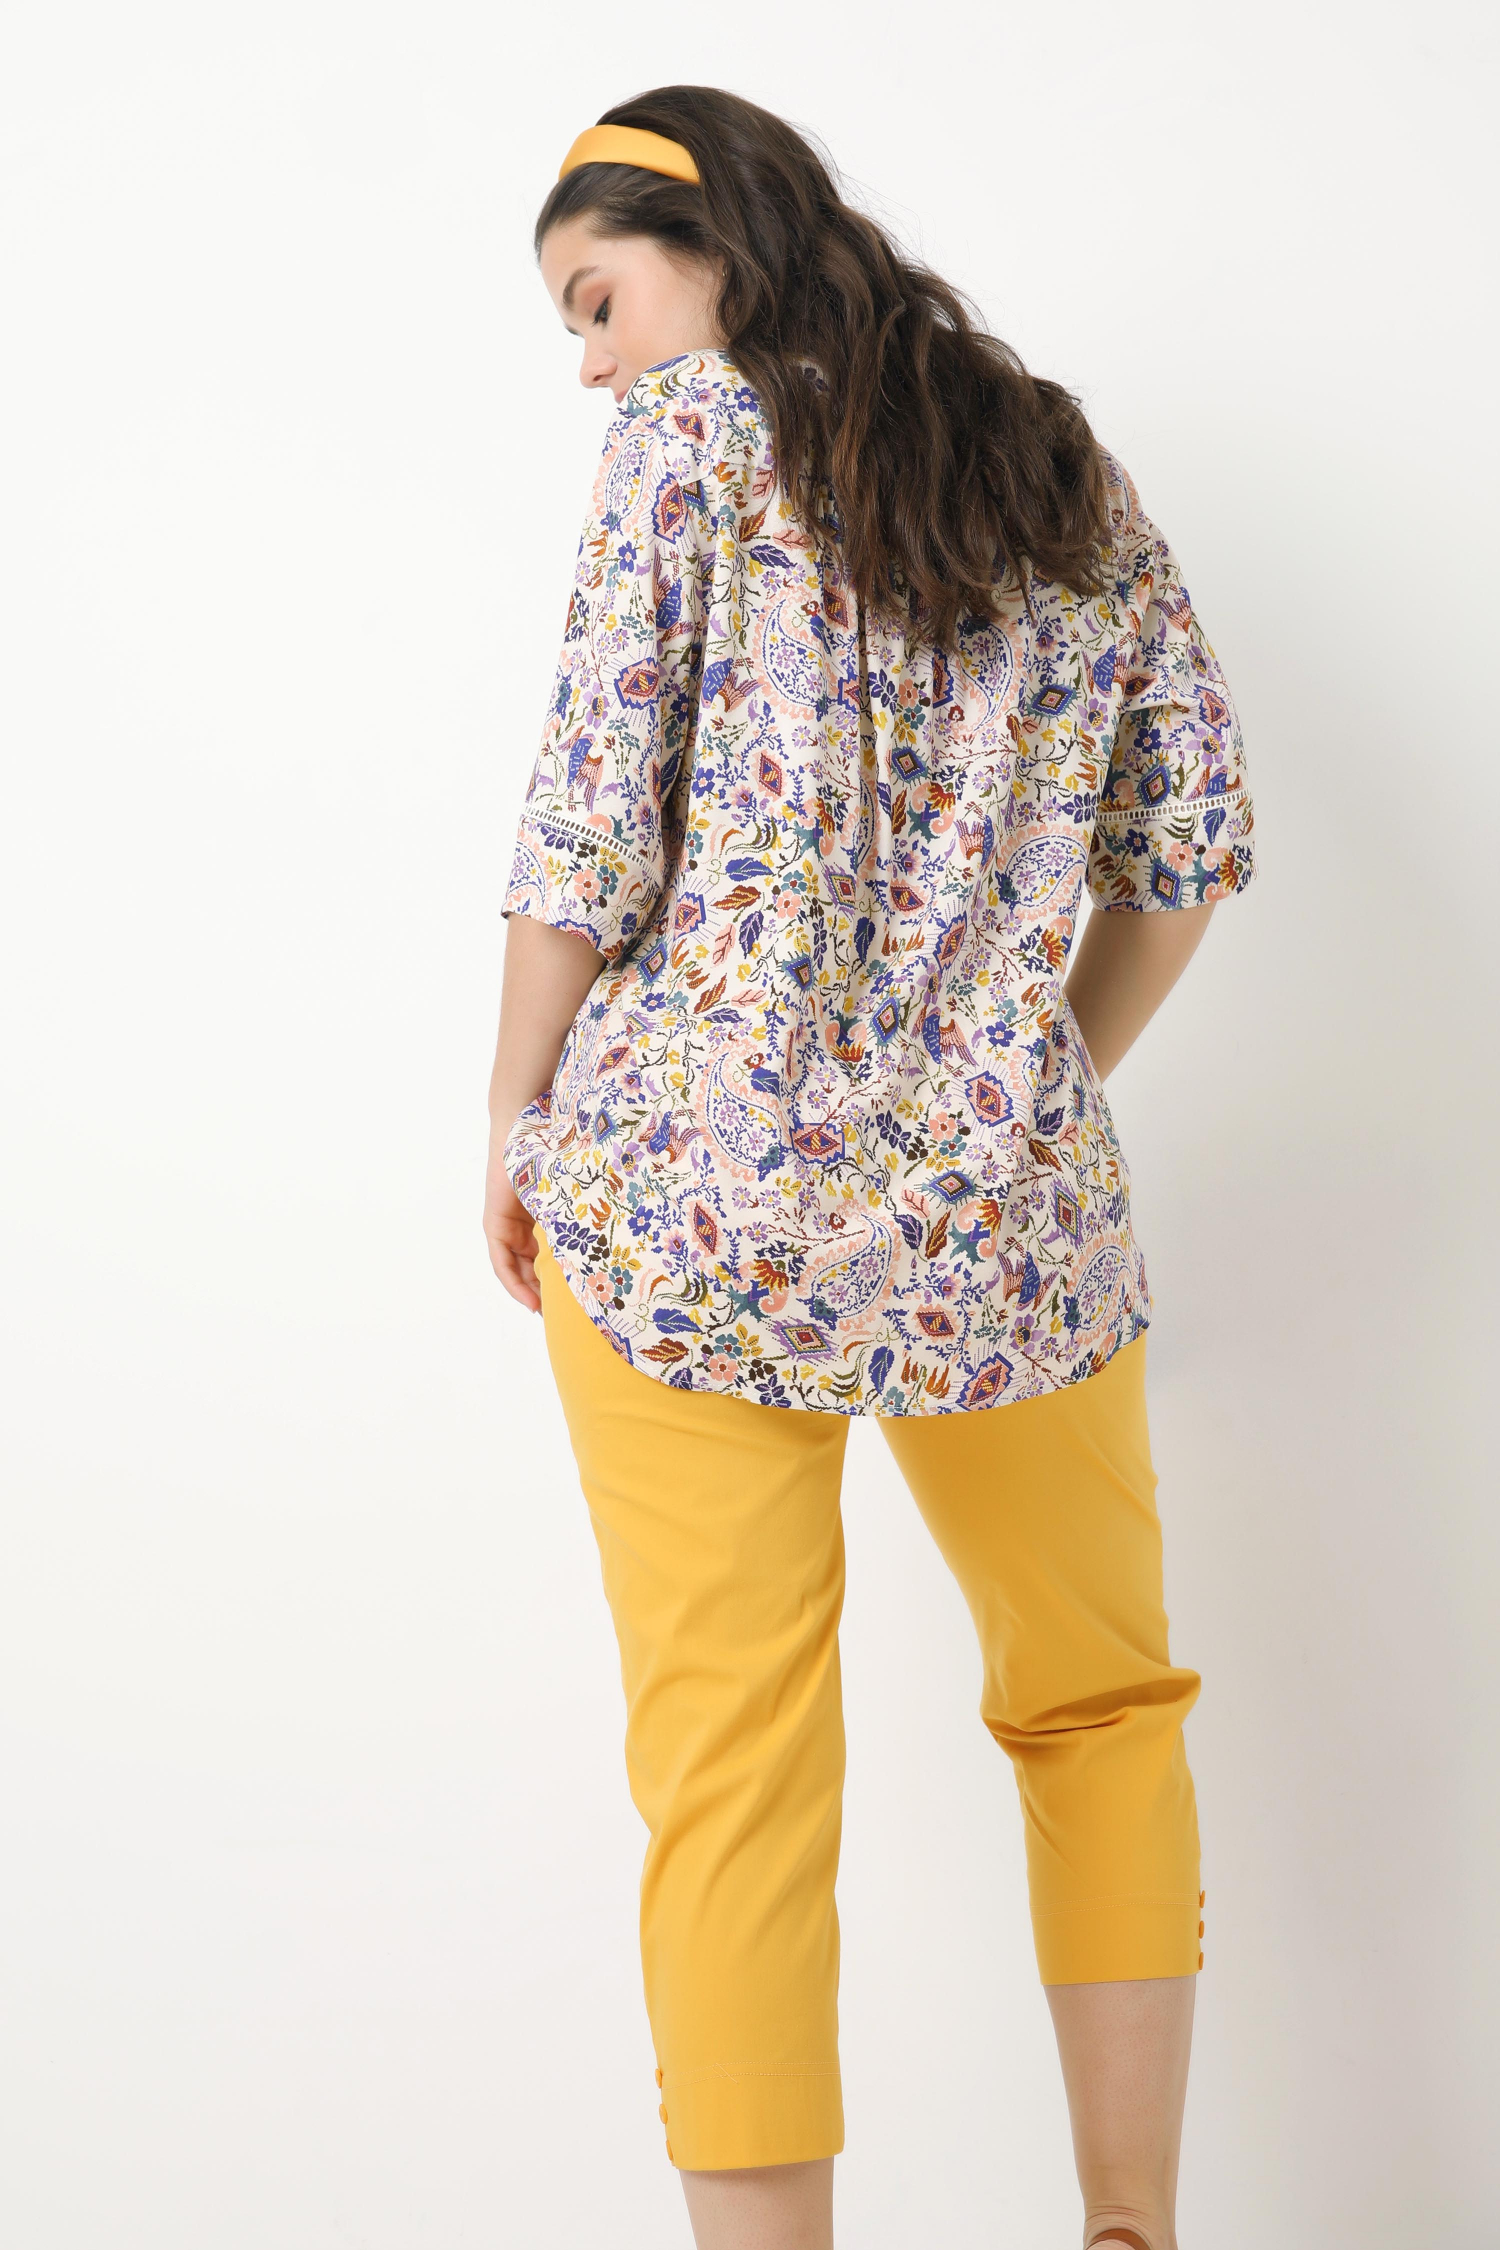 Cashmere print blouse with éco-responsable fabrics (expedition 20/25 June)